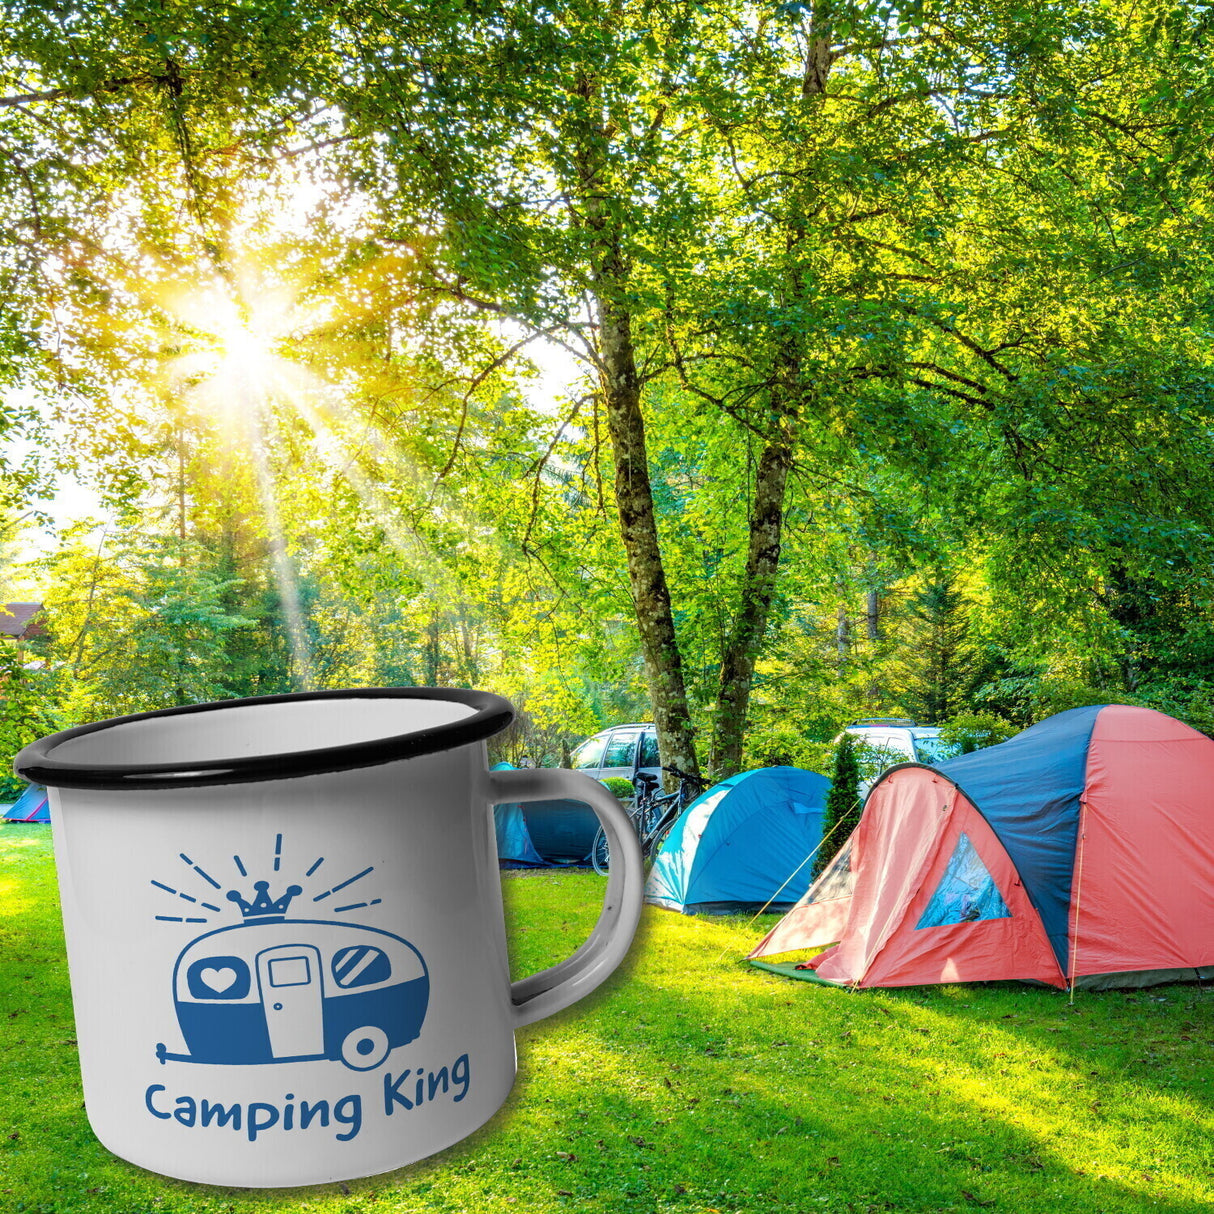 Camping King Emailletasse mit Wohnwagen